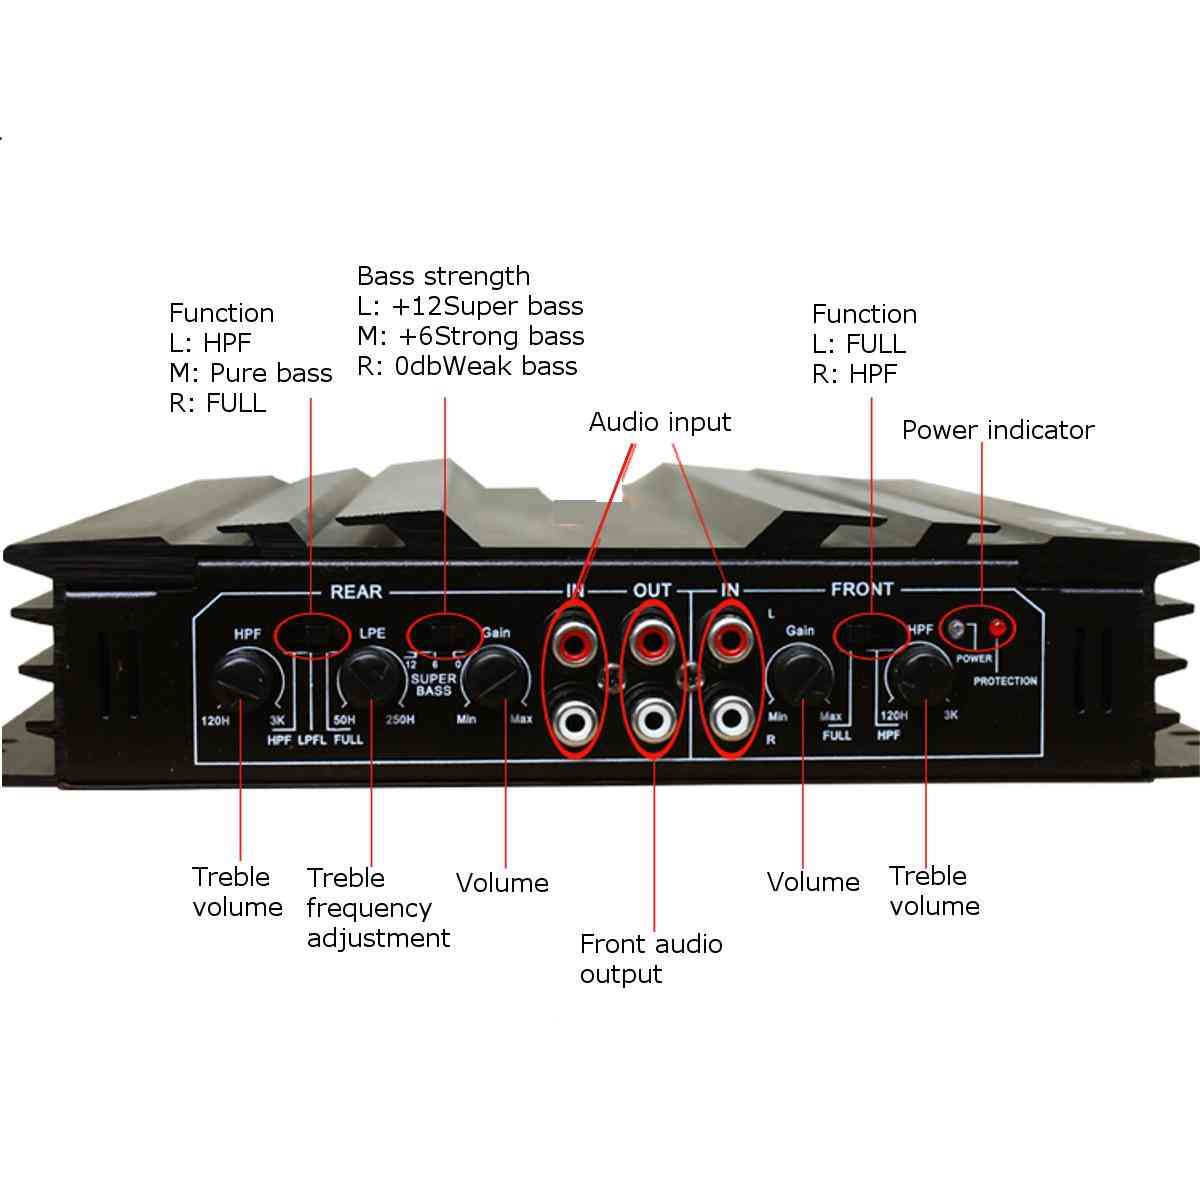 5800w Car Home Audio Power Amplifier